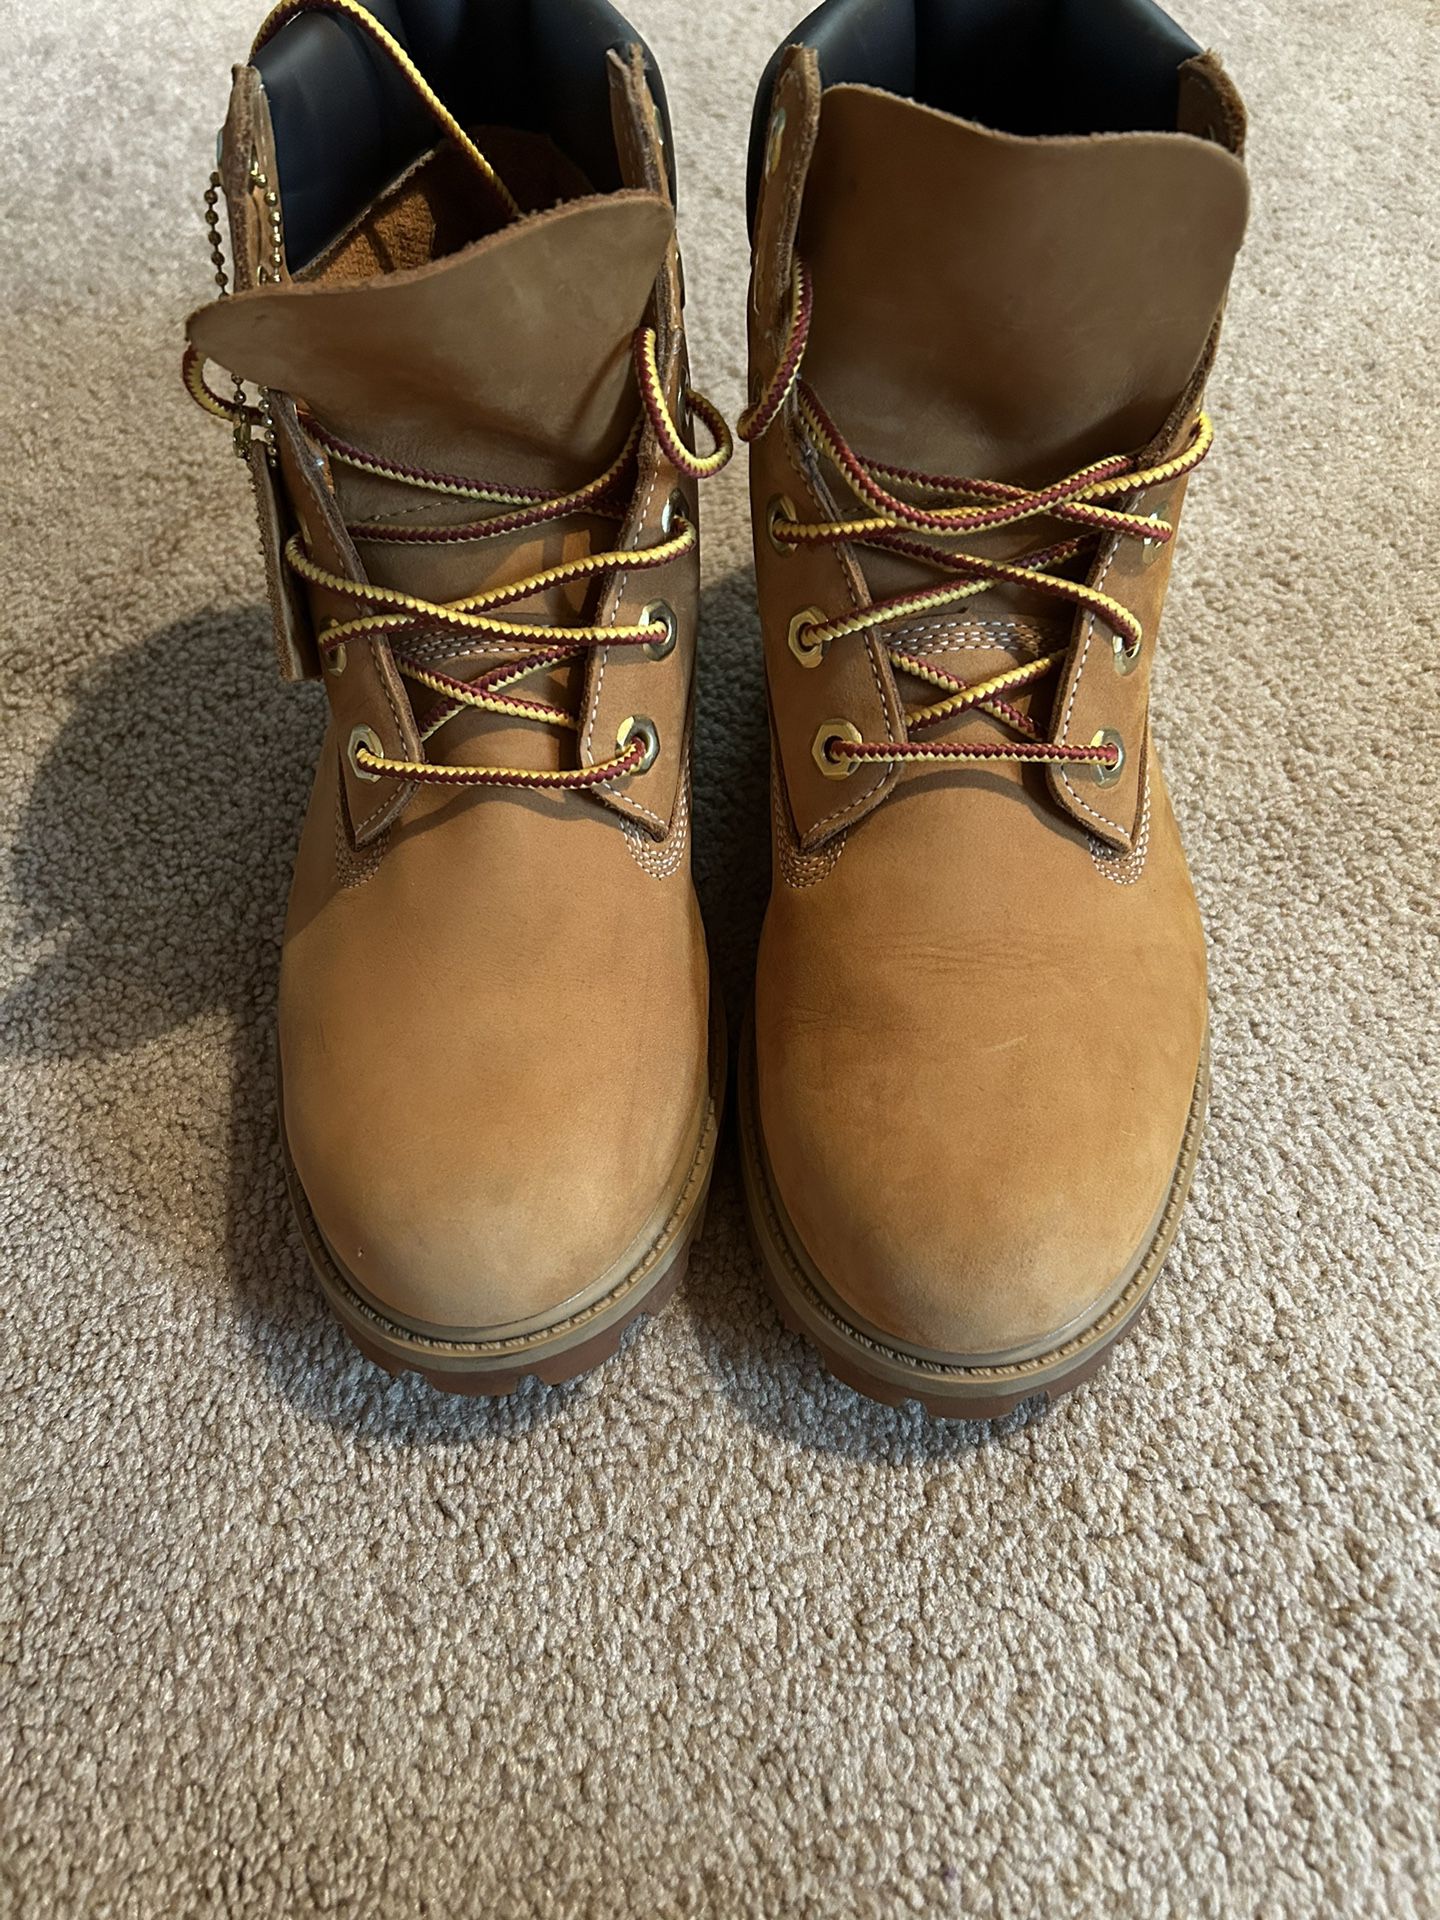 Timberland boots Size 5.5 Boys/Men